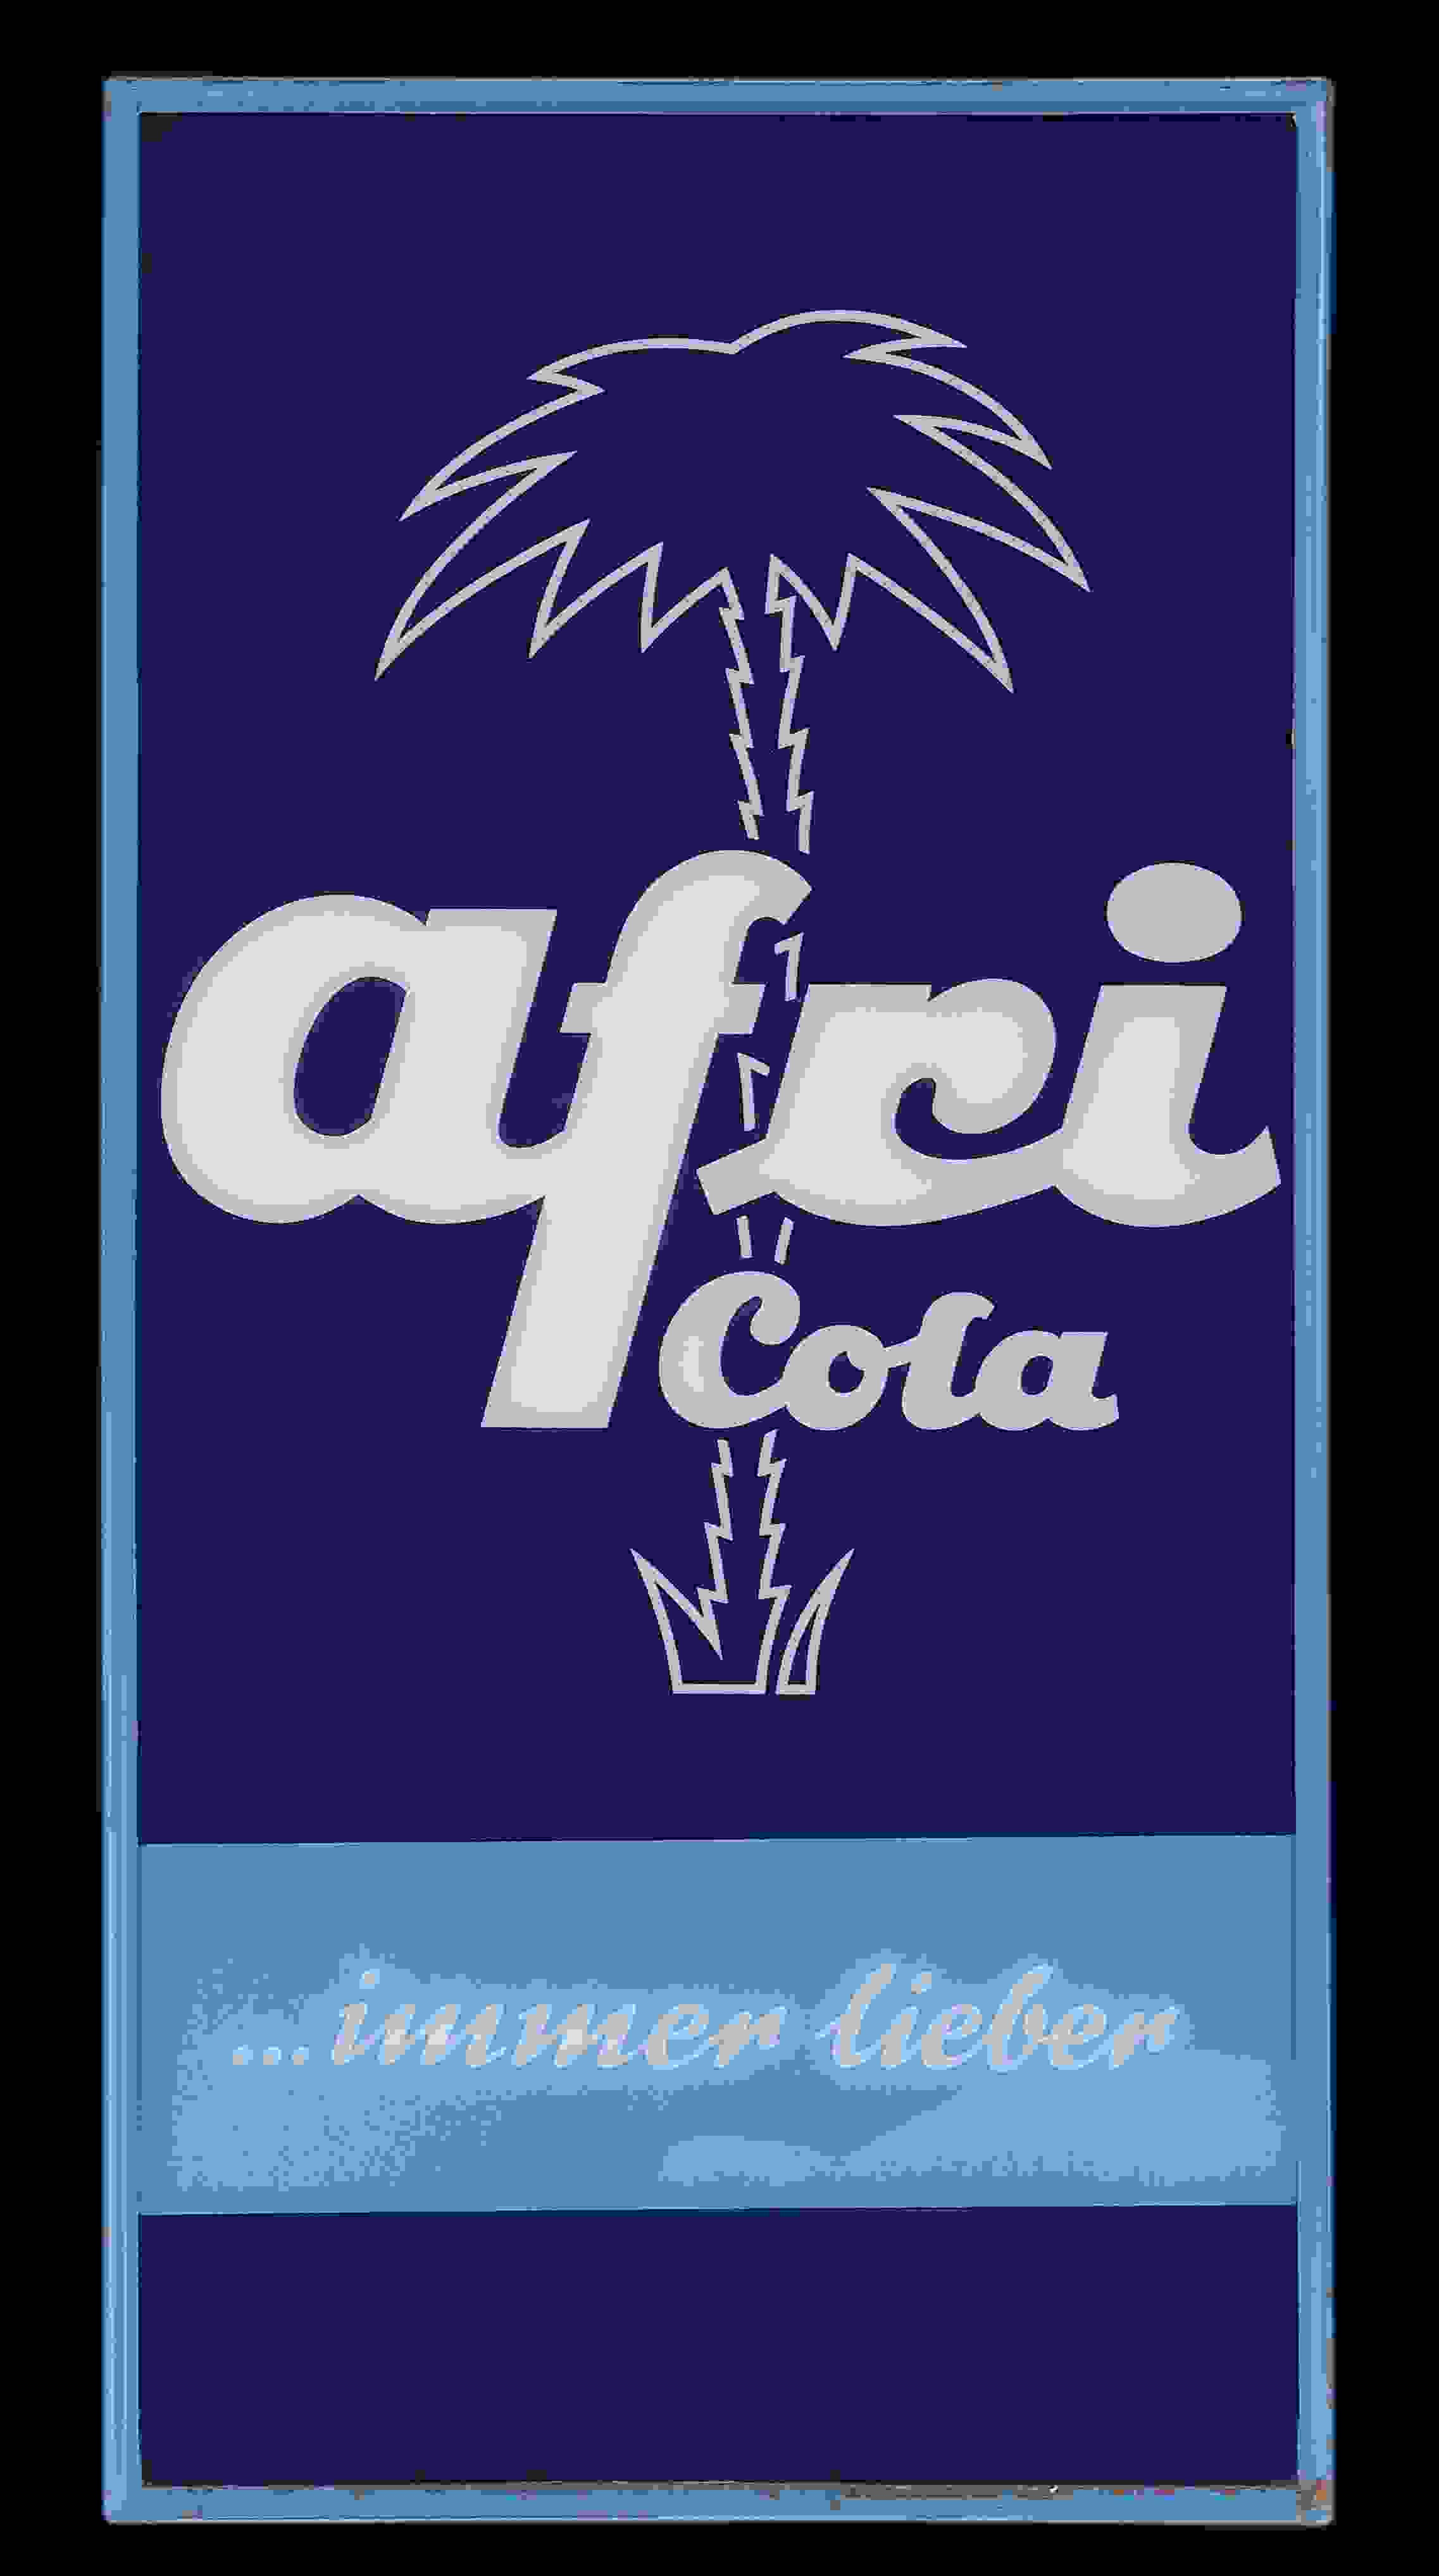 Afri Cola …immer lieber 